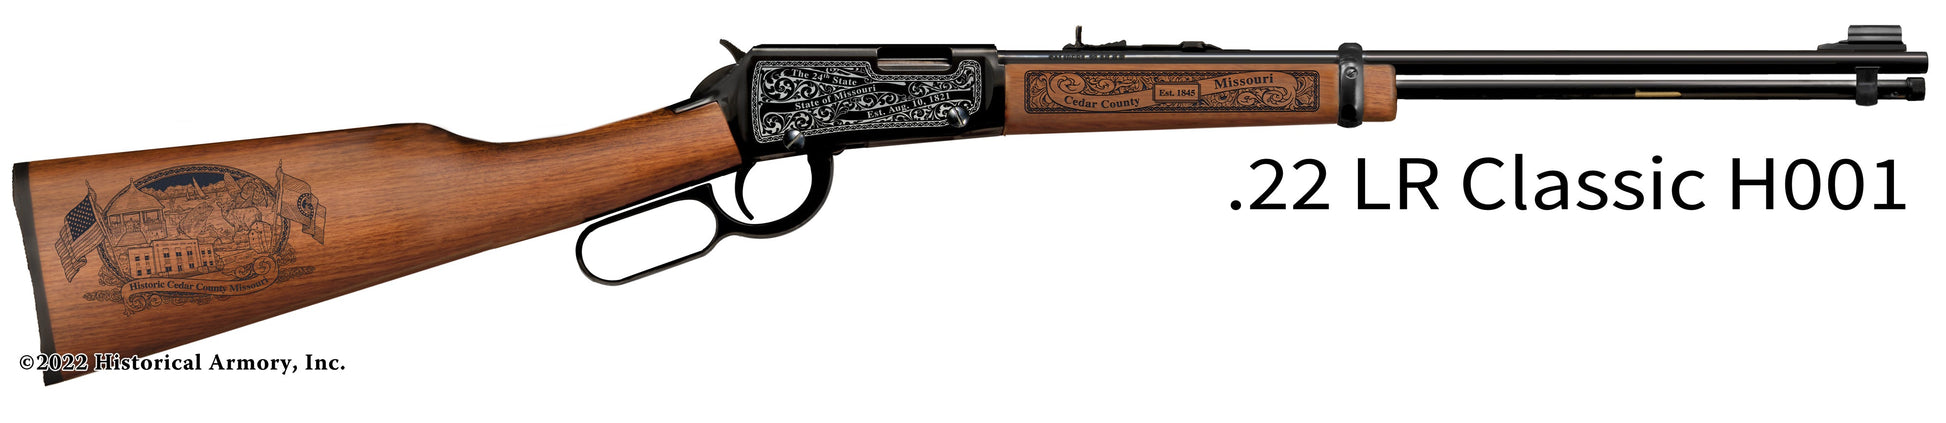 Cedar County Missouri Engraved Henry H001 Rifle